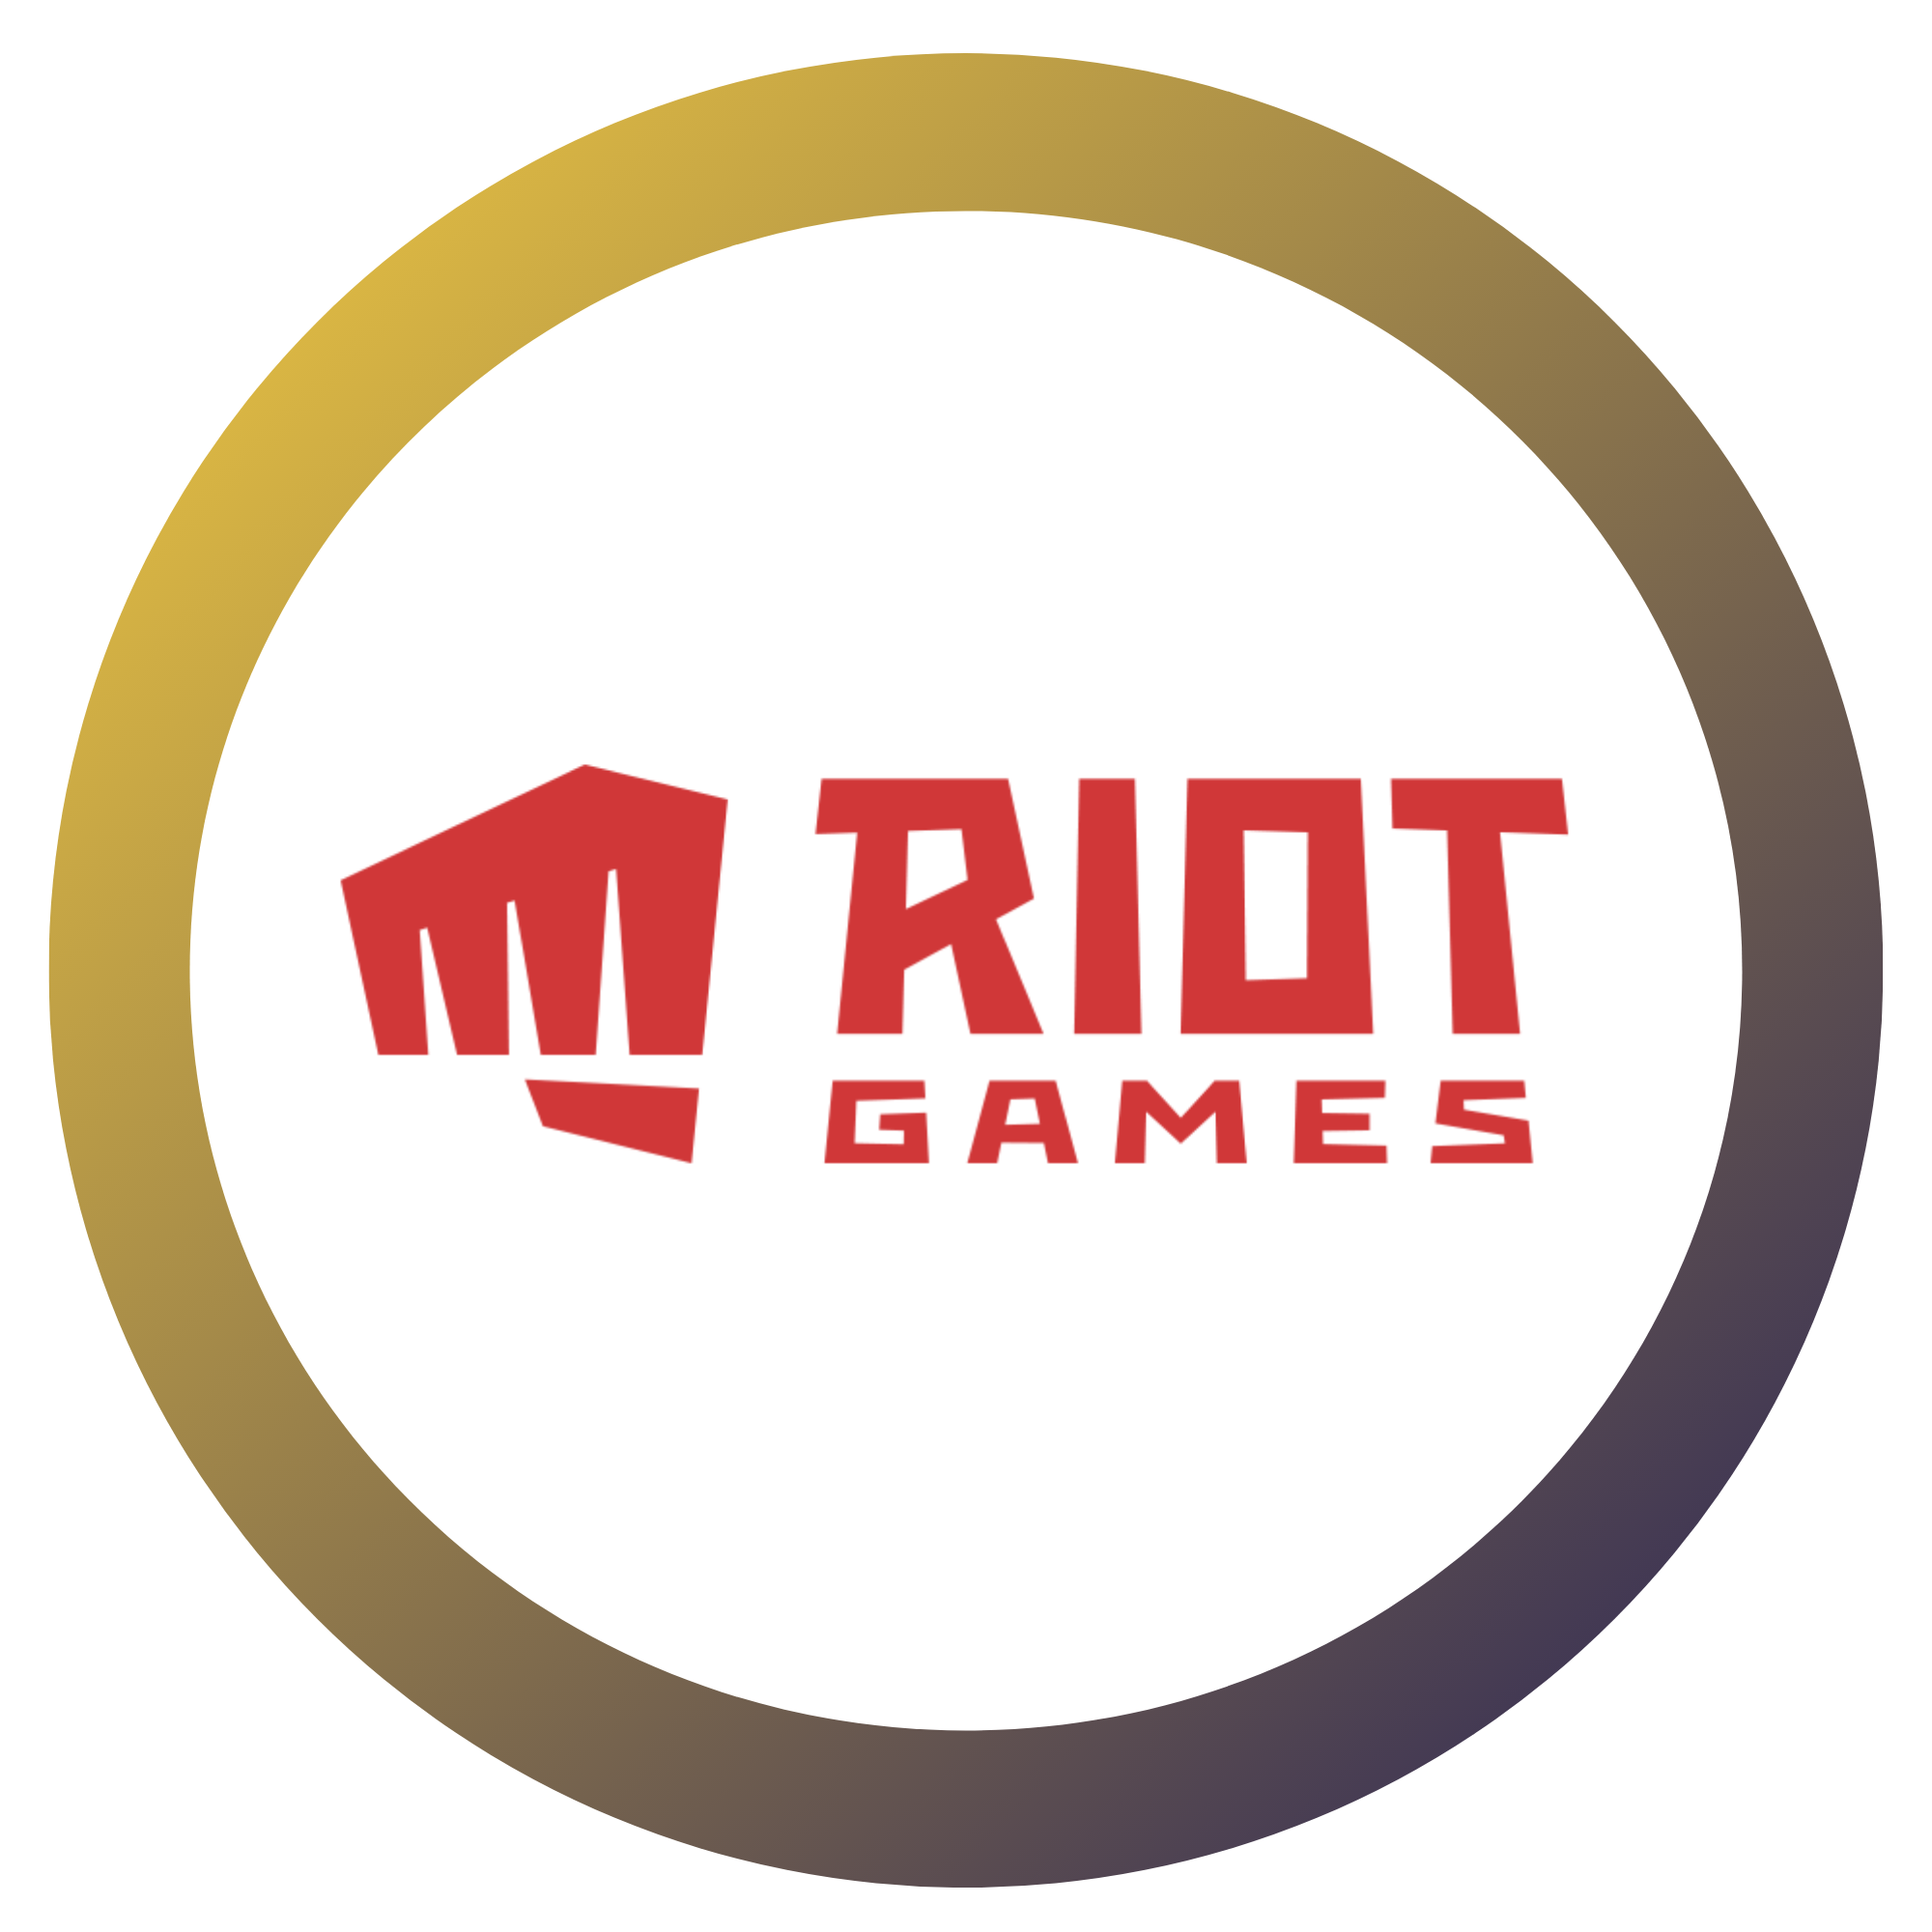 Riot Games is a Campus Forward Award Winner